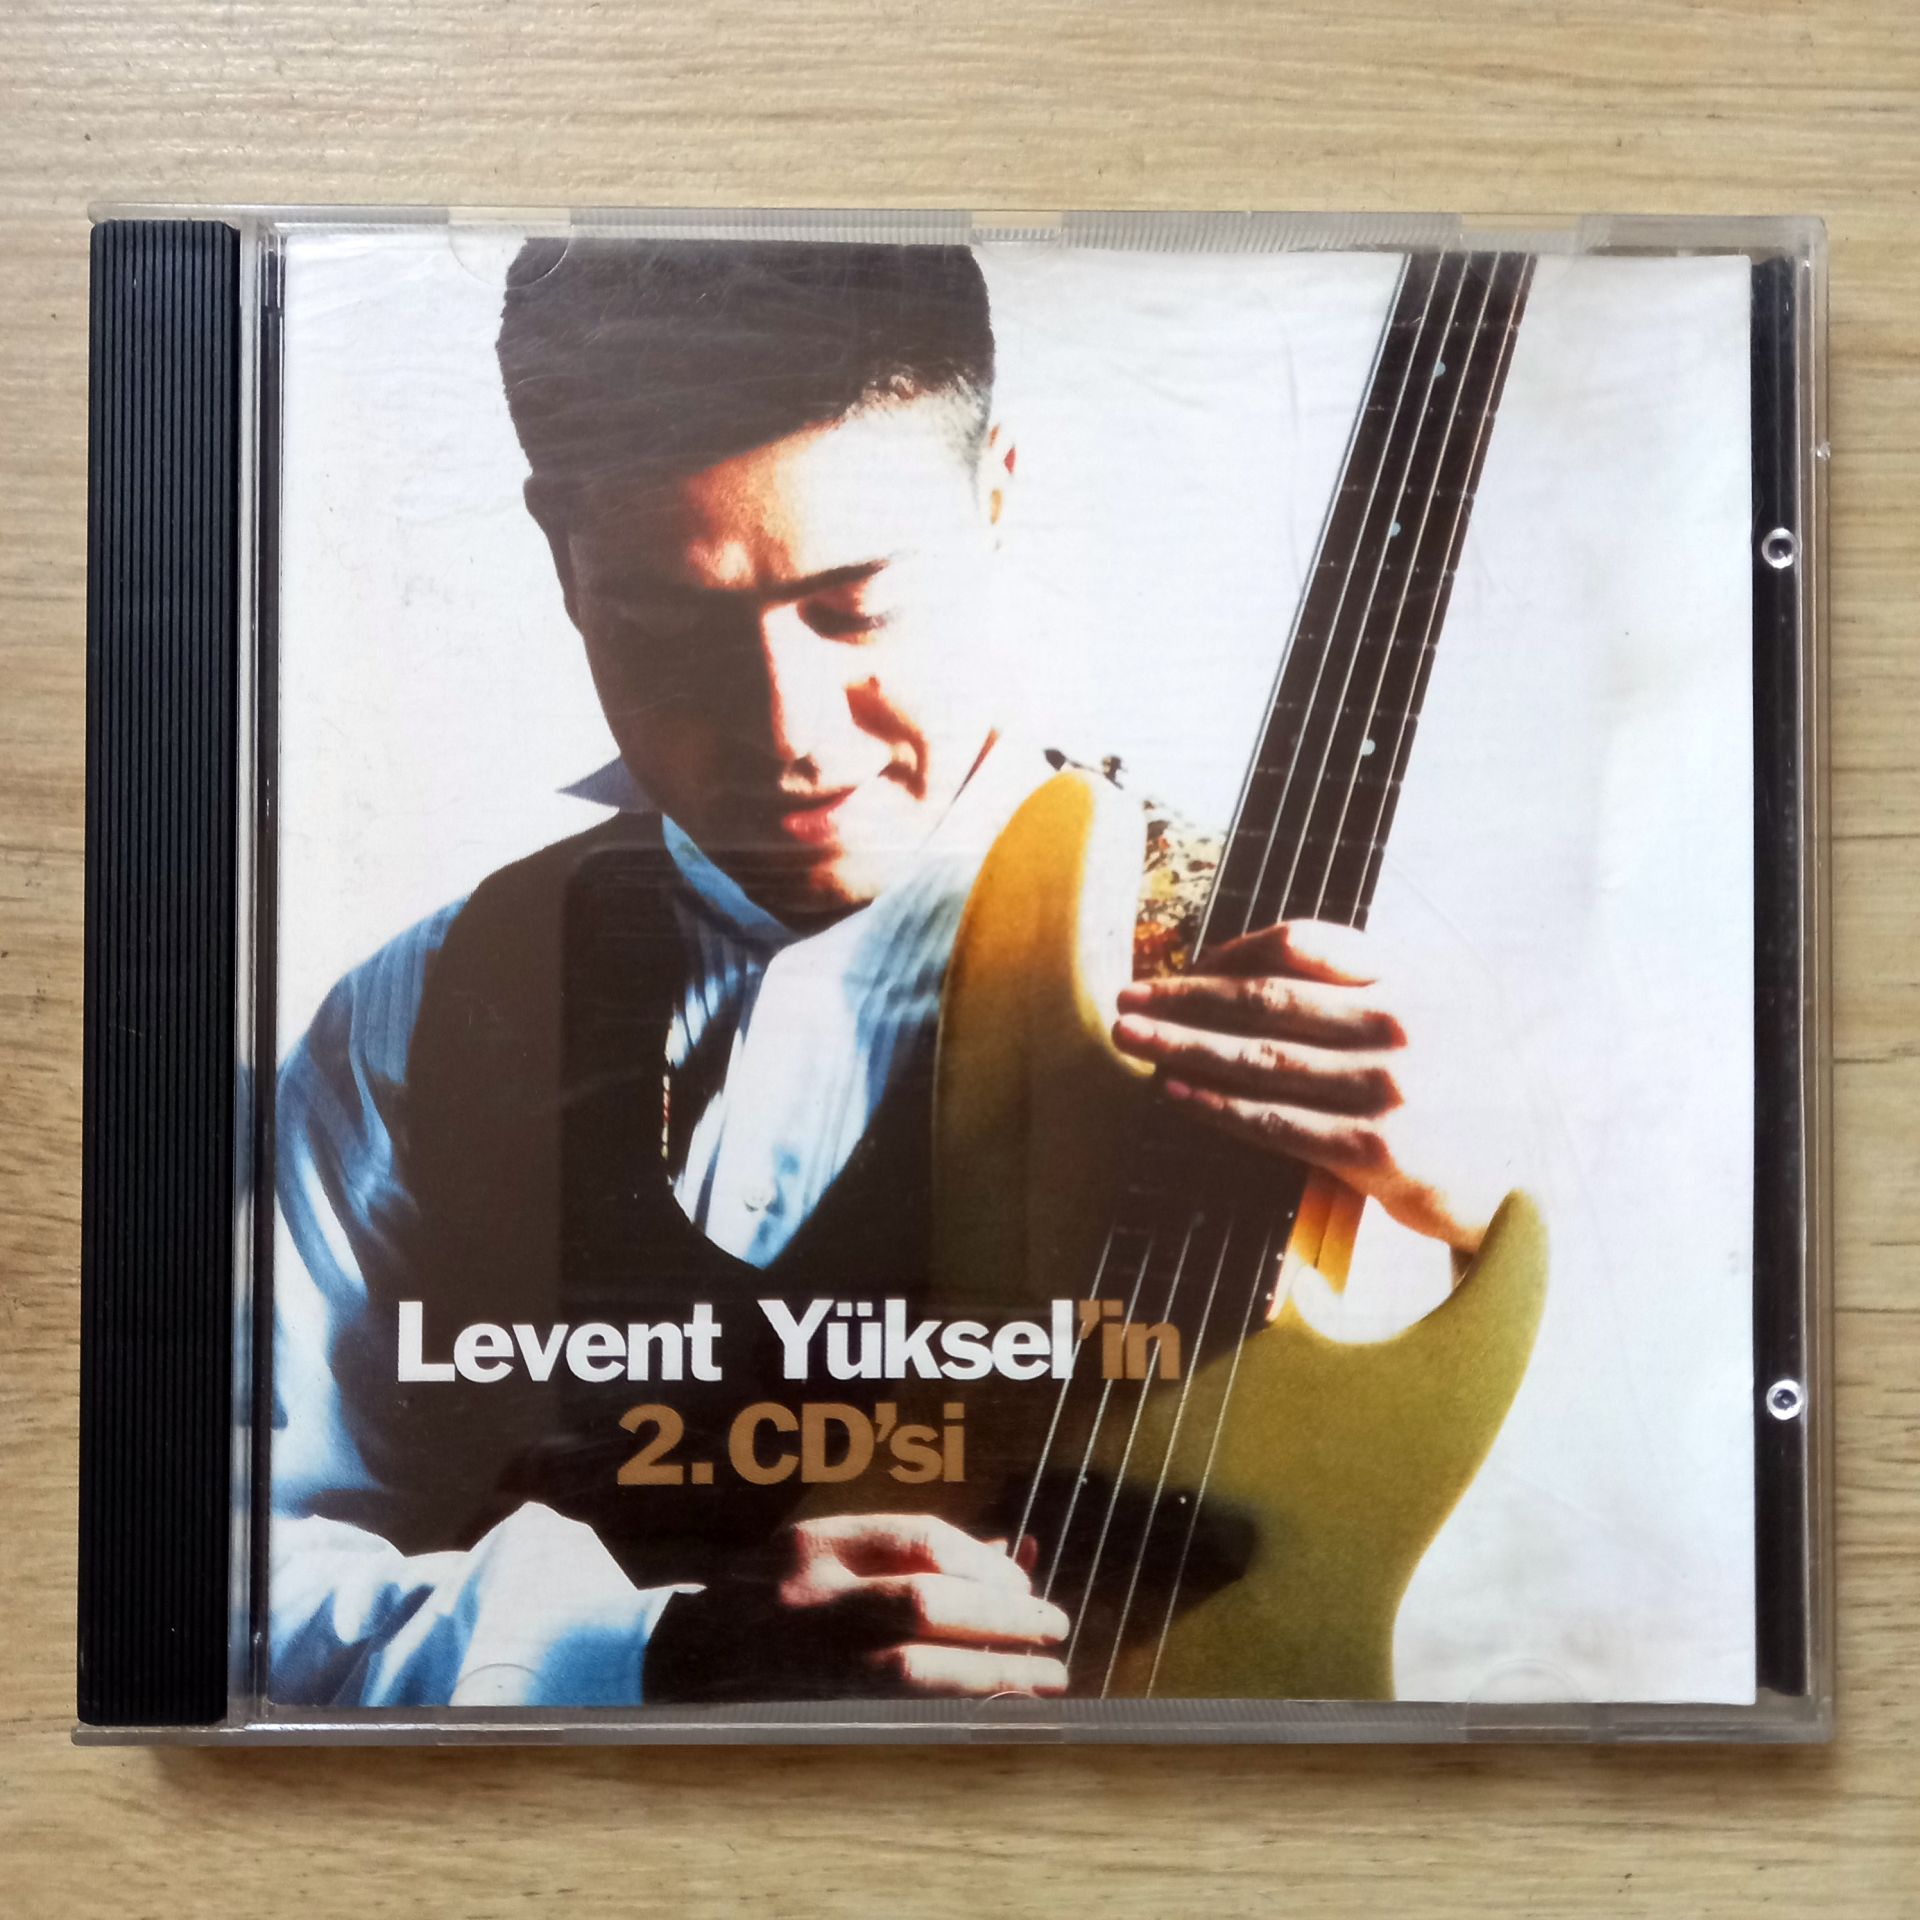 LEVENT YÜKSEL – LEVENT YÜKSEL'İN 2.CD'Sİ (1996) - CD 2.EL